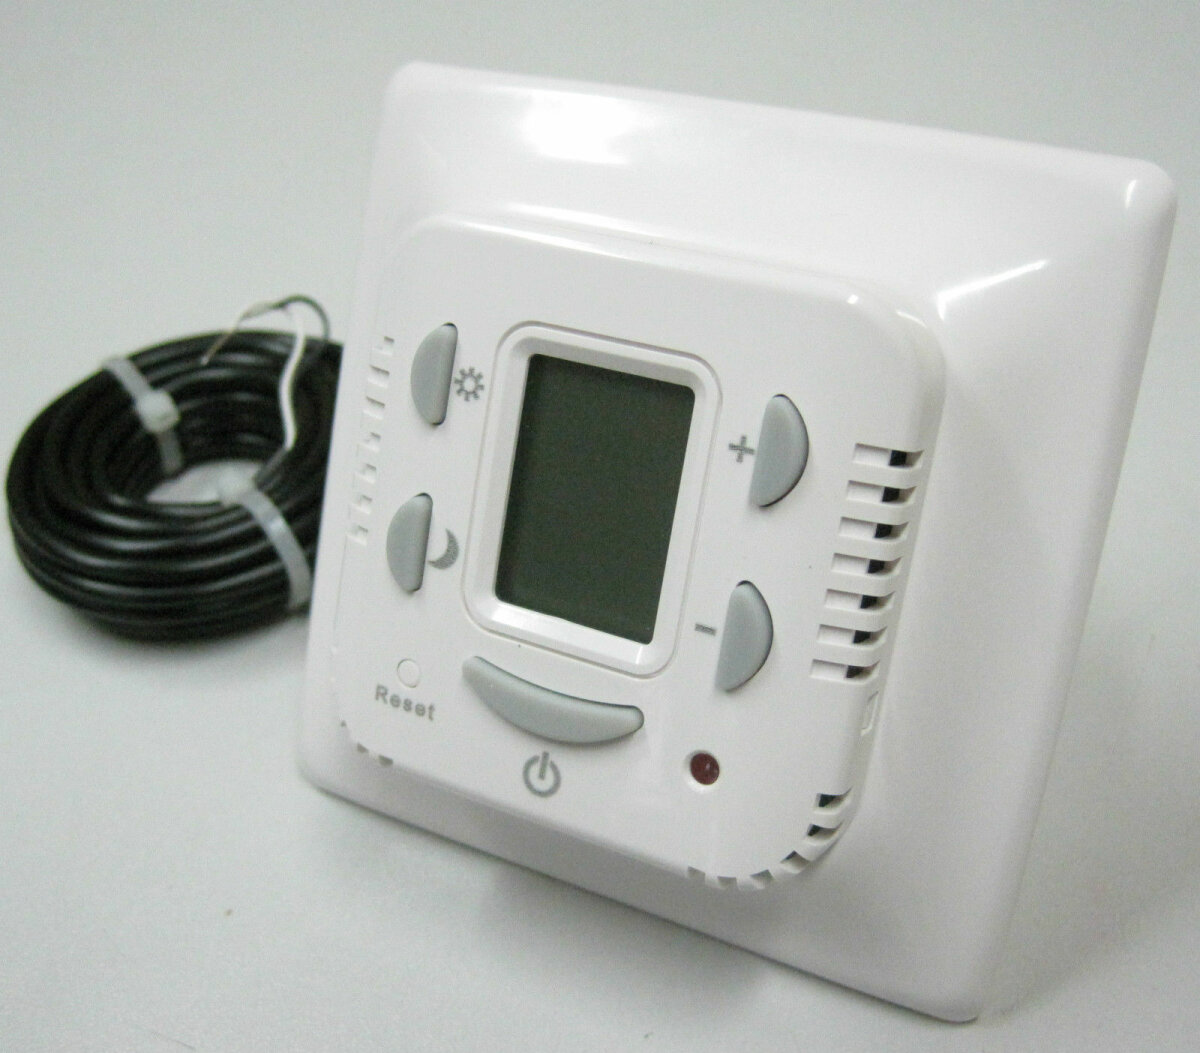 Thermostat E506 with 2 remote sensors, 39,00